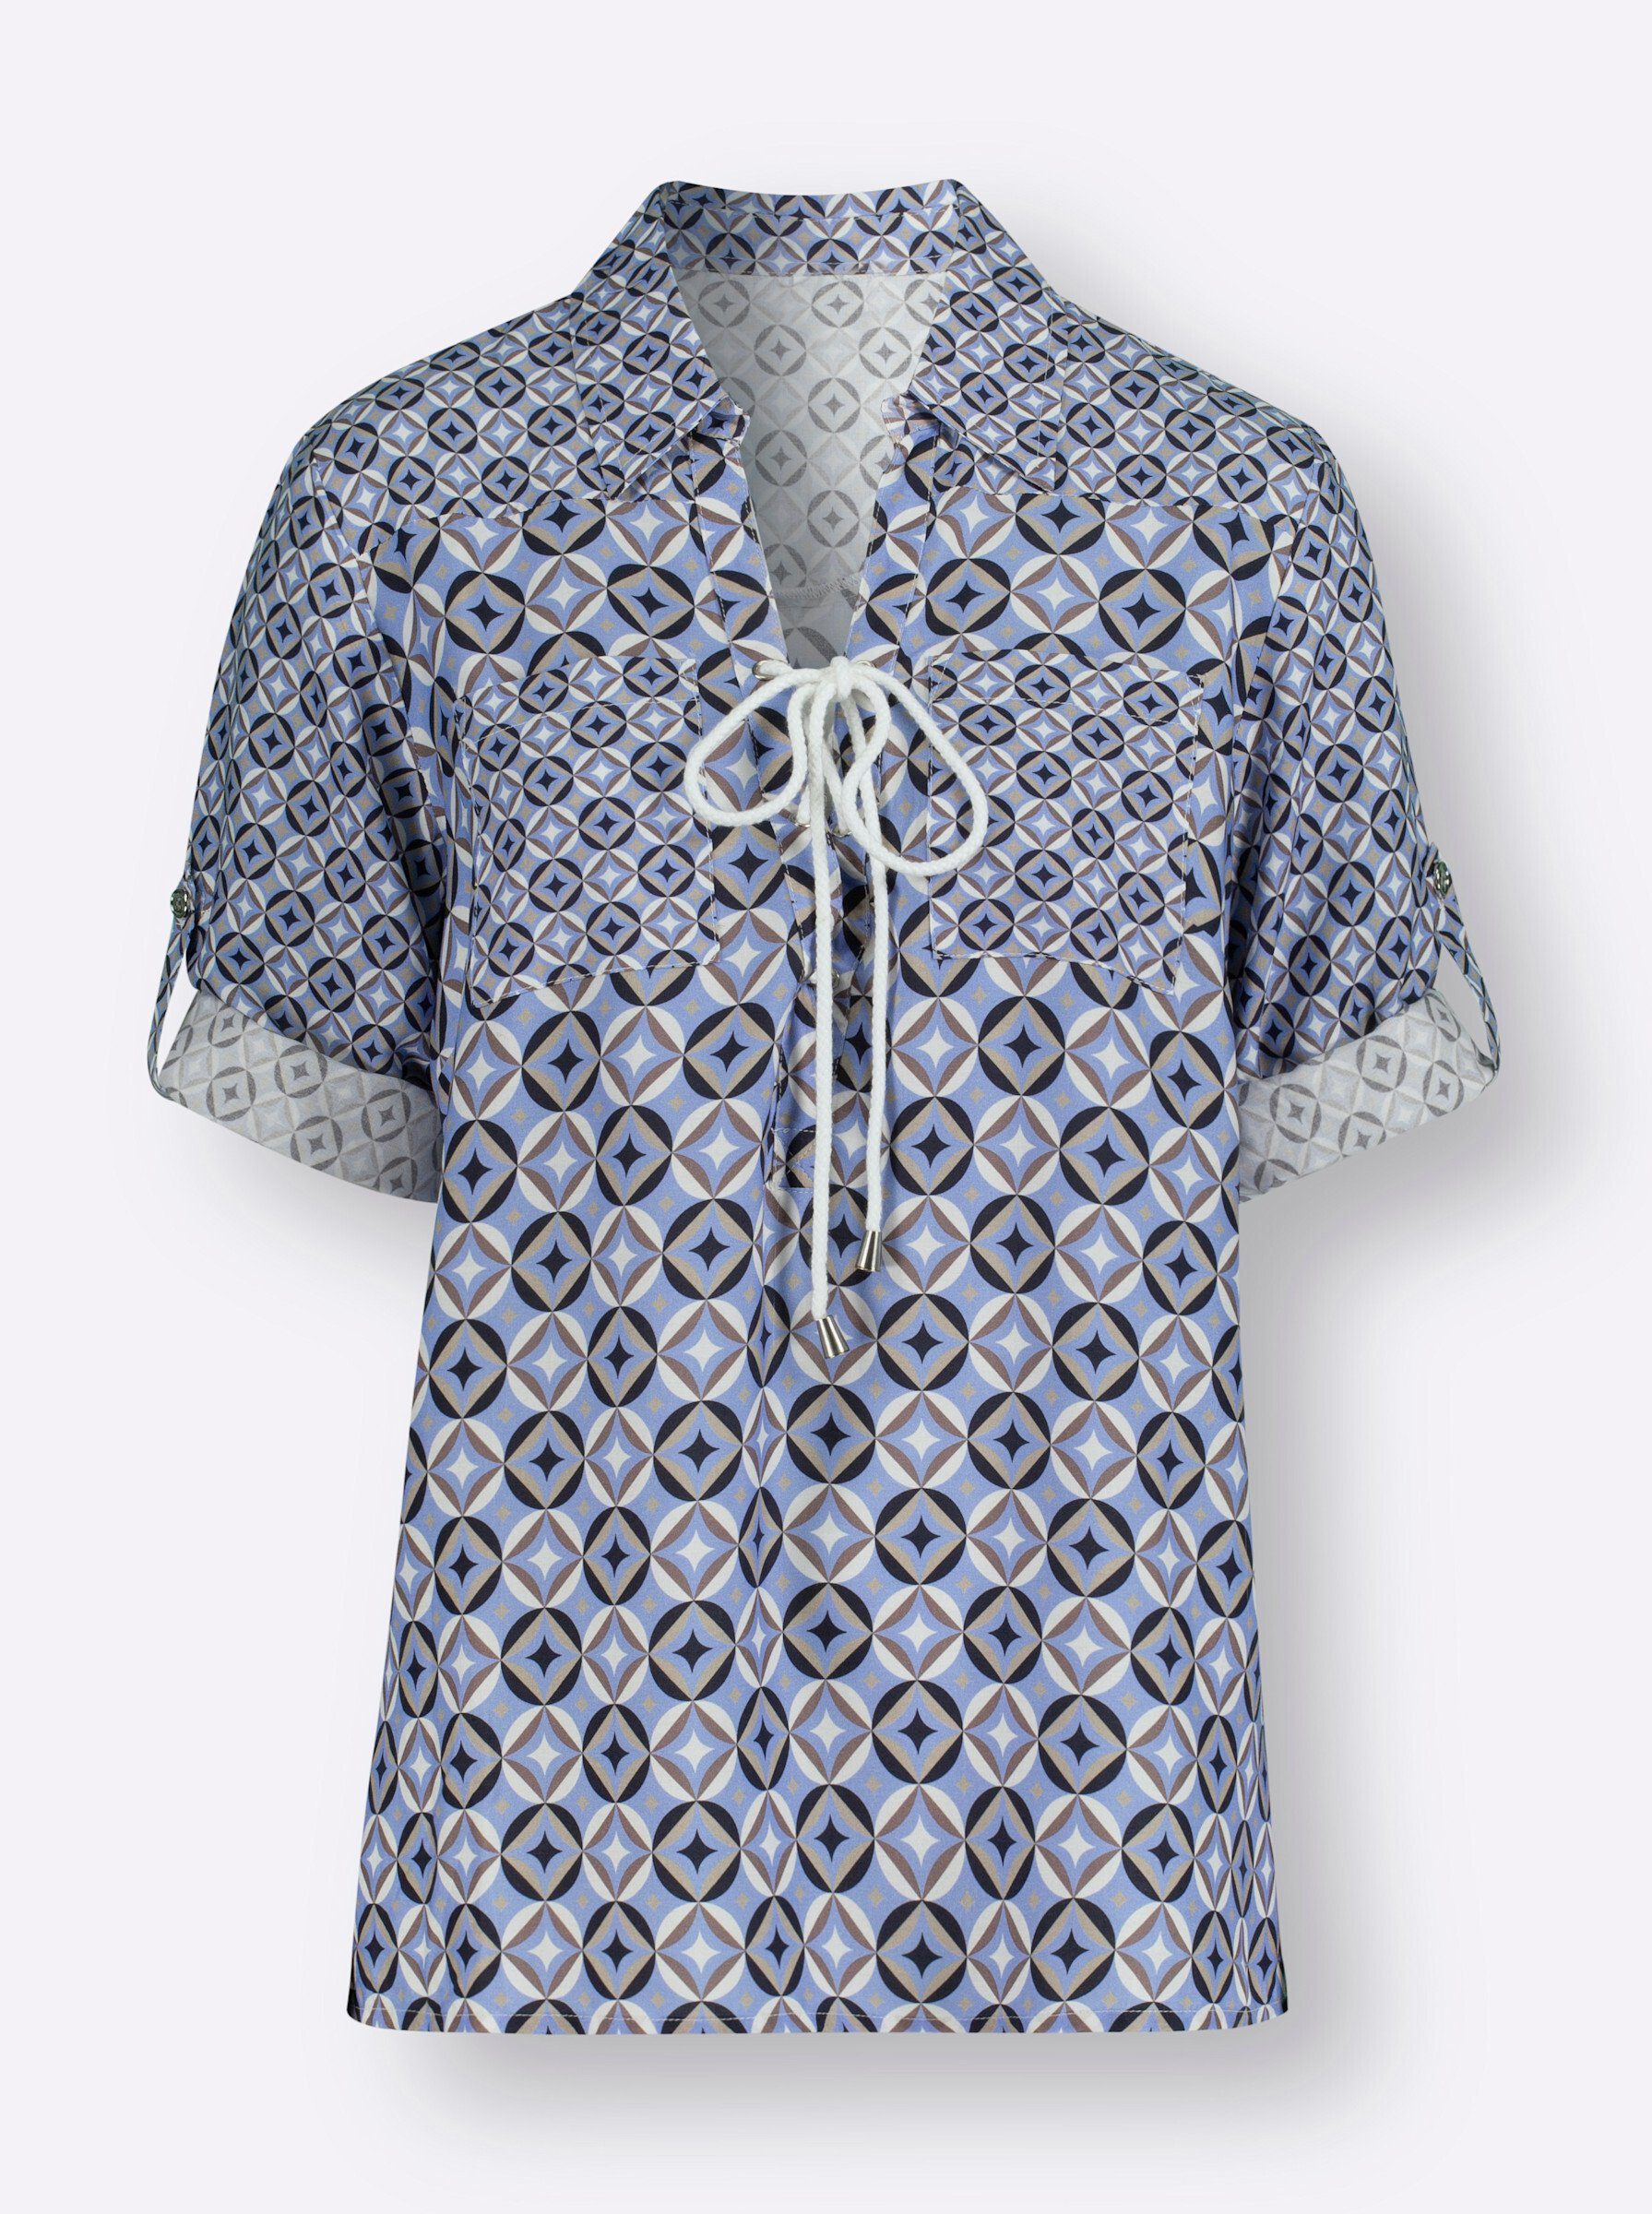 himmelblau-marine-bedruckt WEIDEN WITT Klassische Bluse